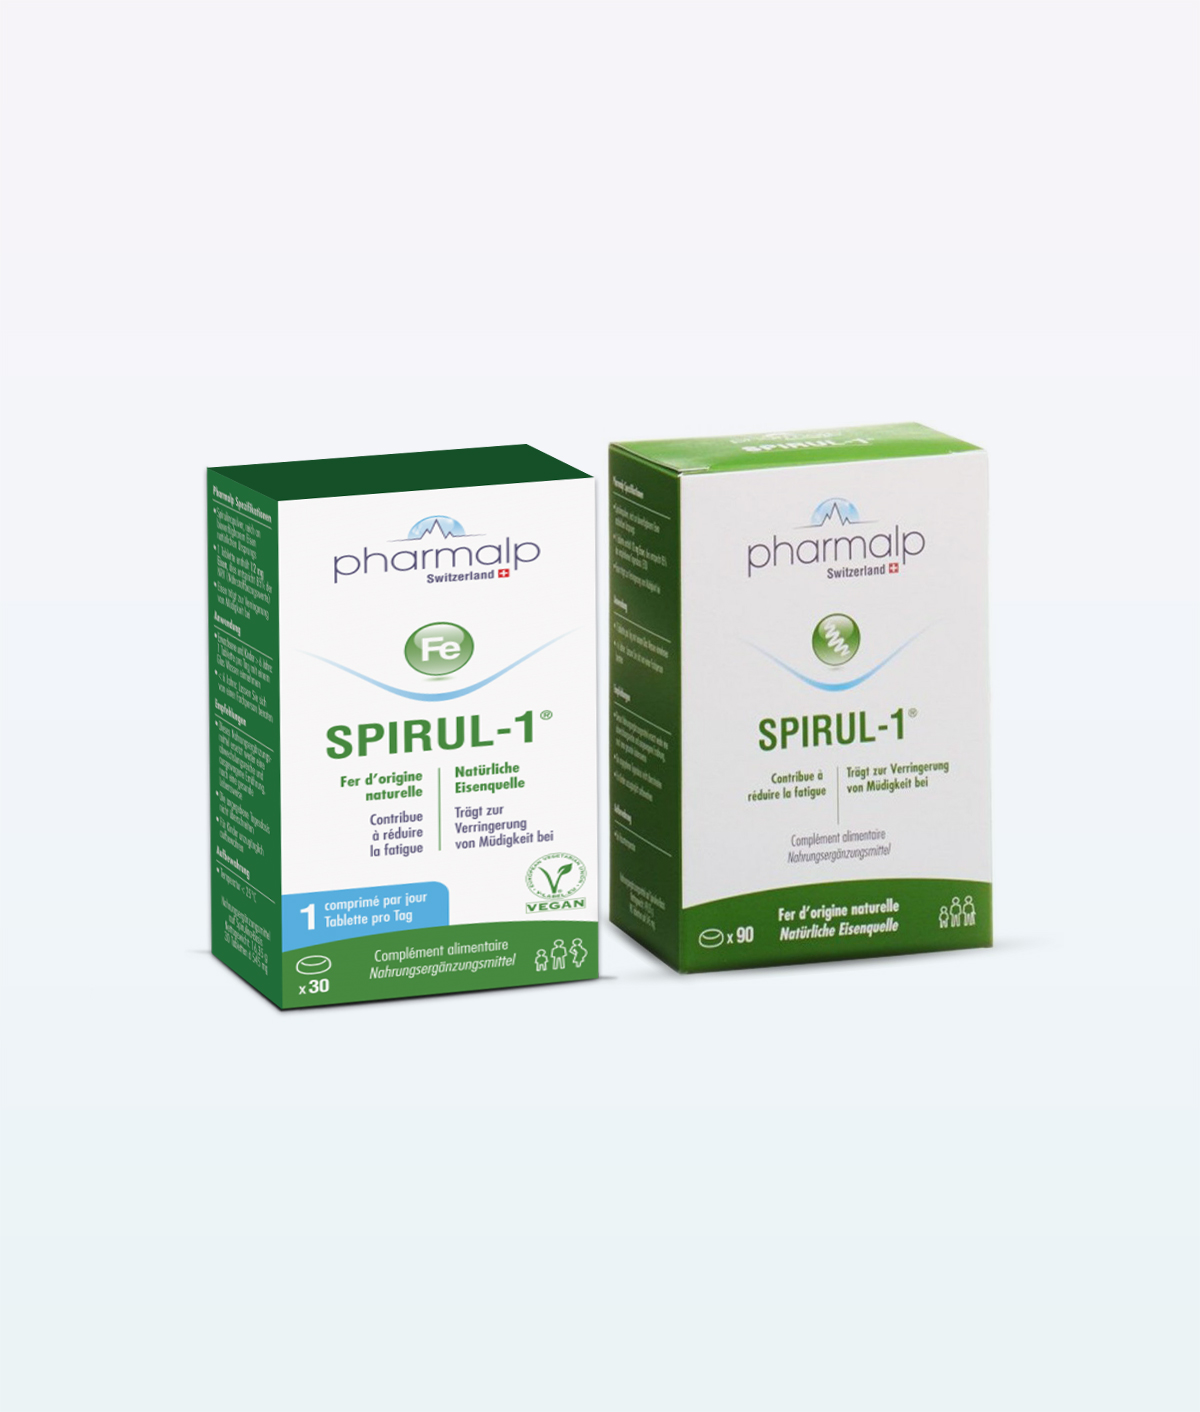 Pharmalp Spirul-1 Supplements